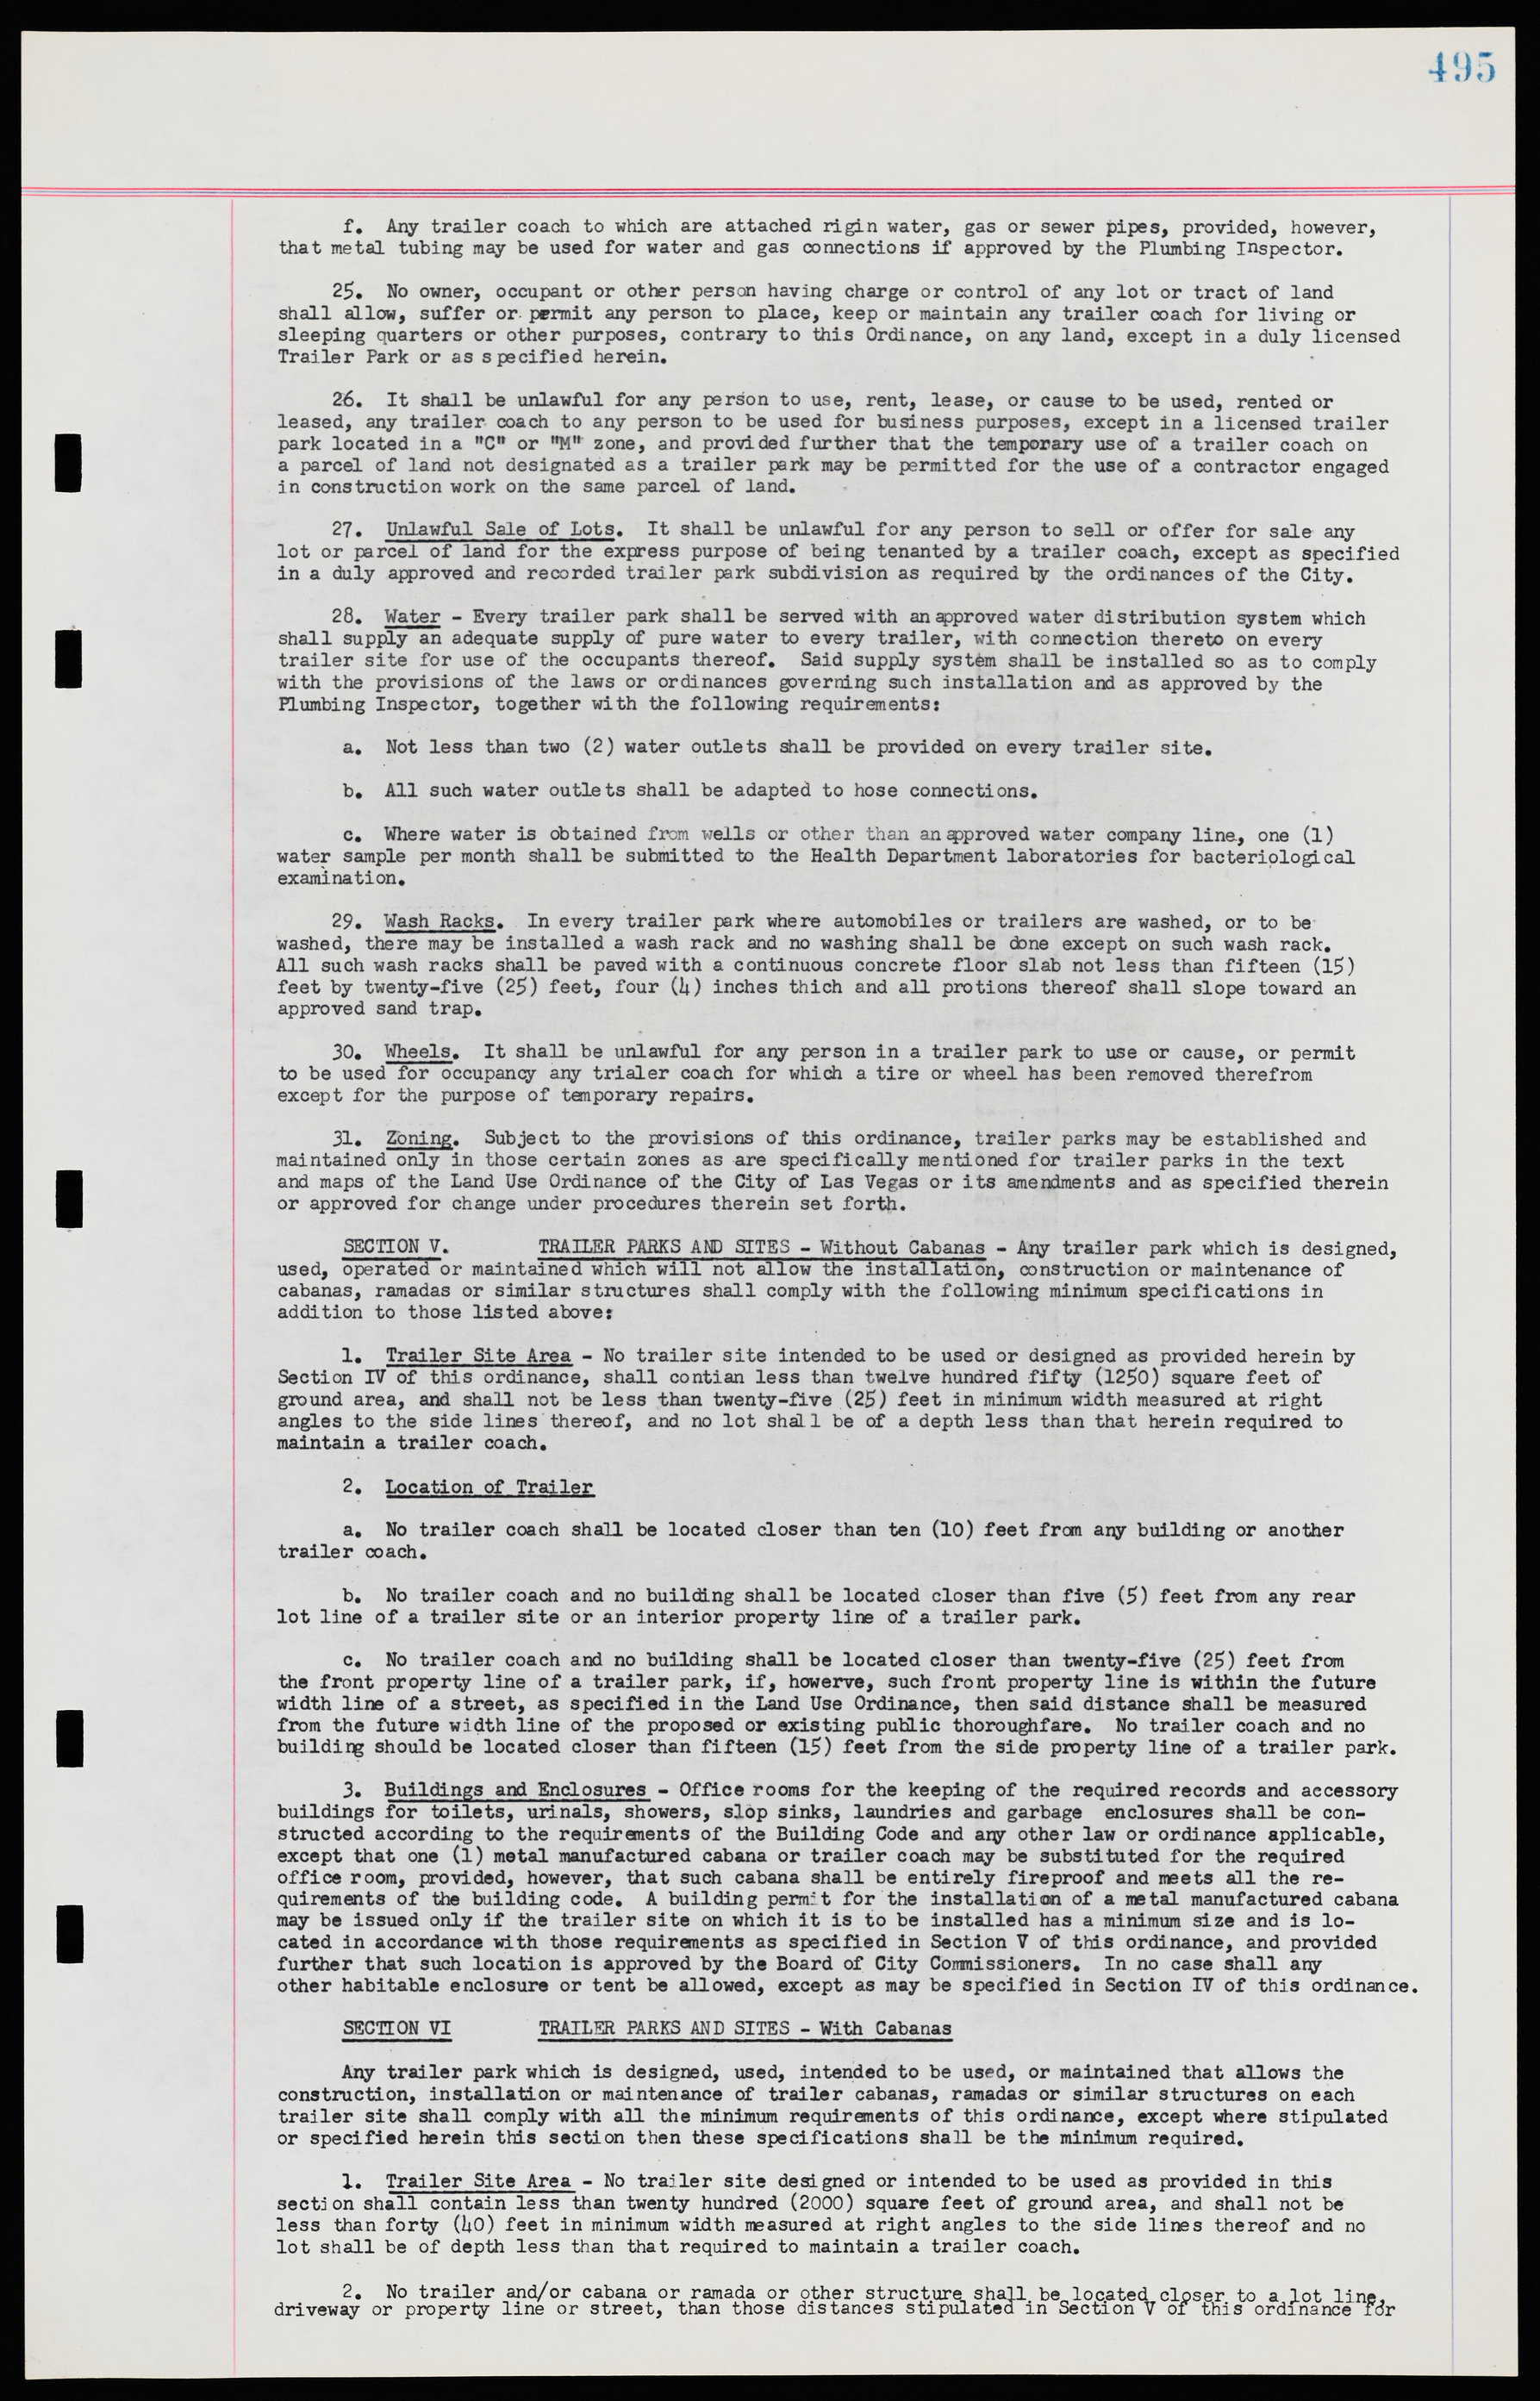 Las Vegas City Ordinances, November 13, 1950 to August 6, 1958, lvc000015-503